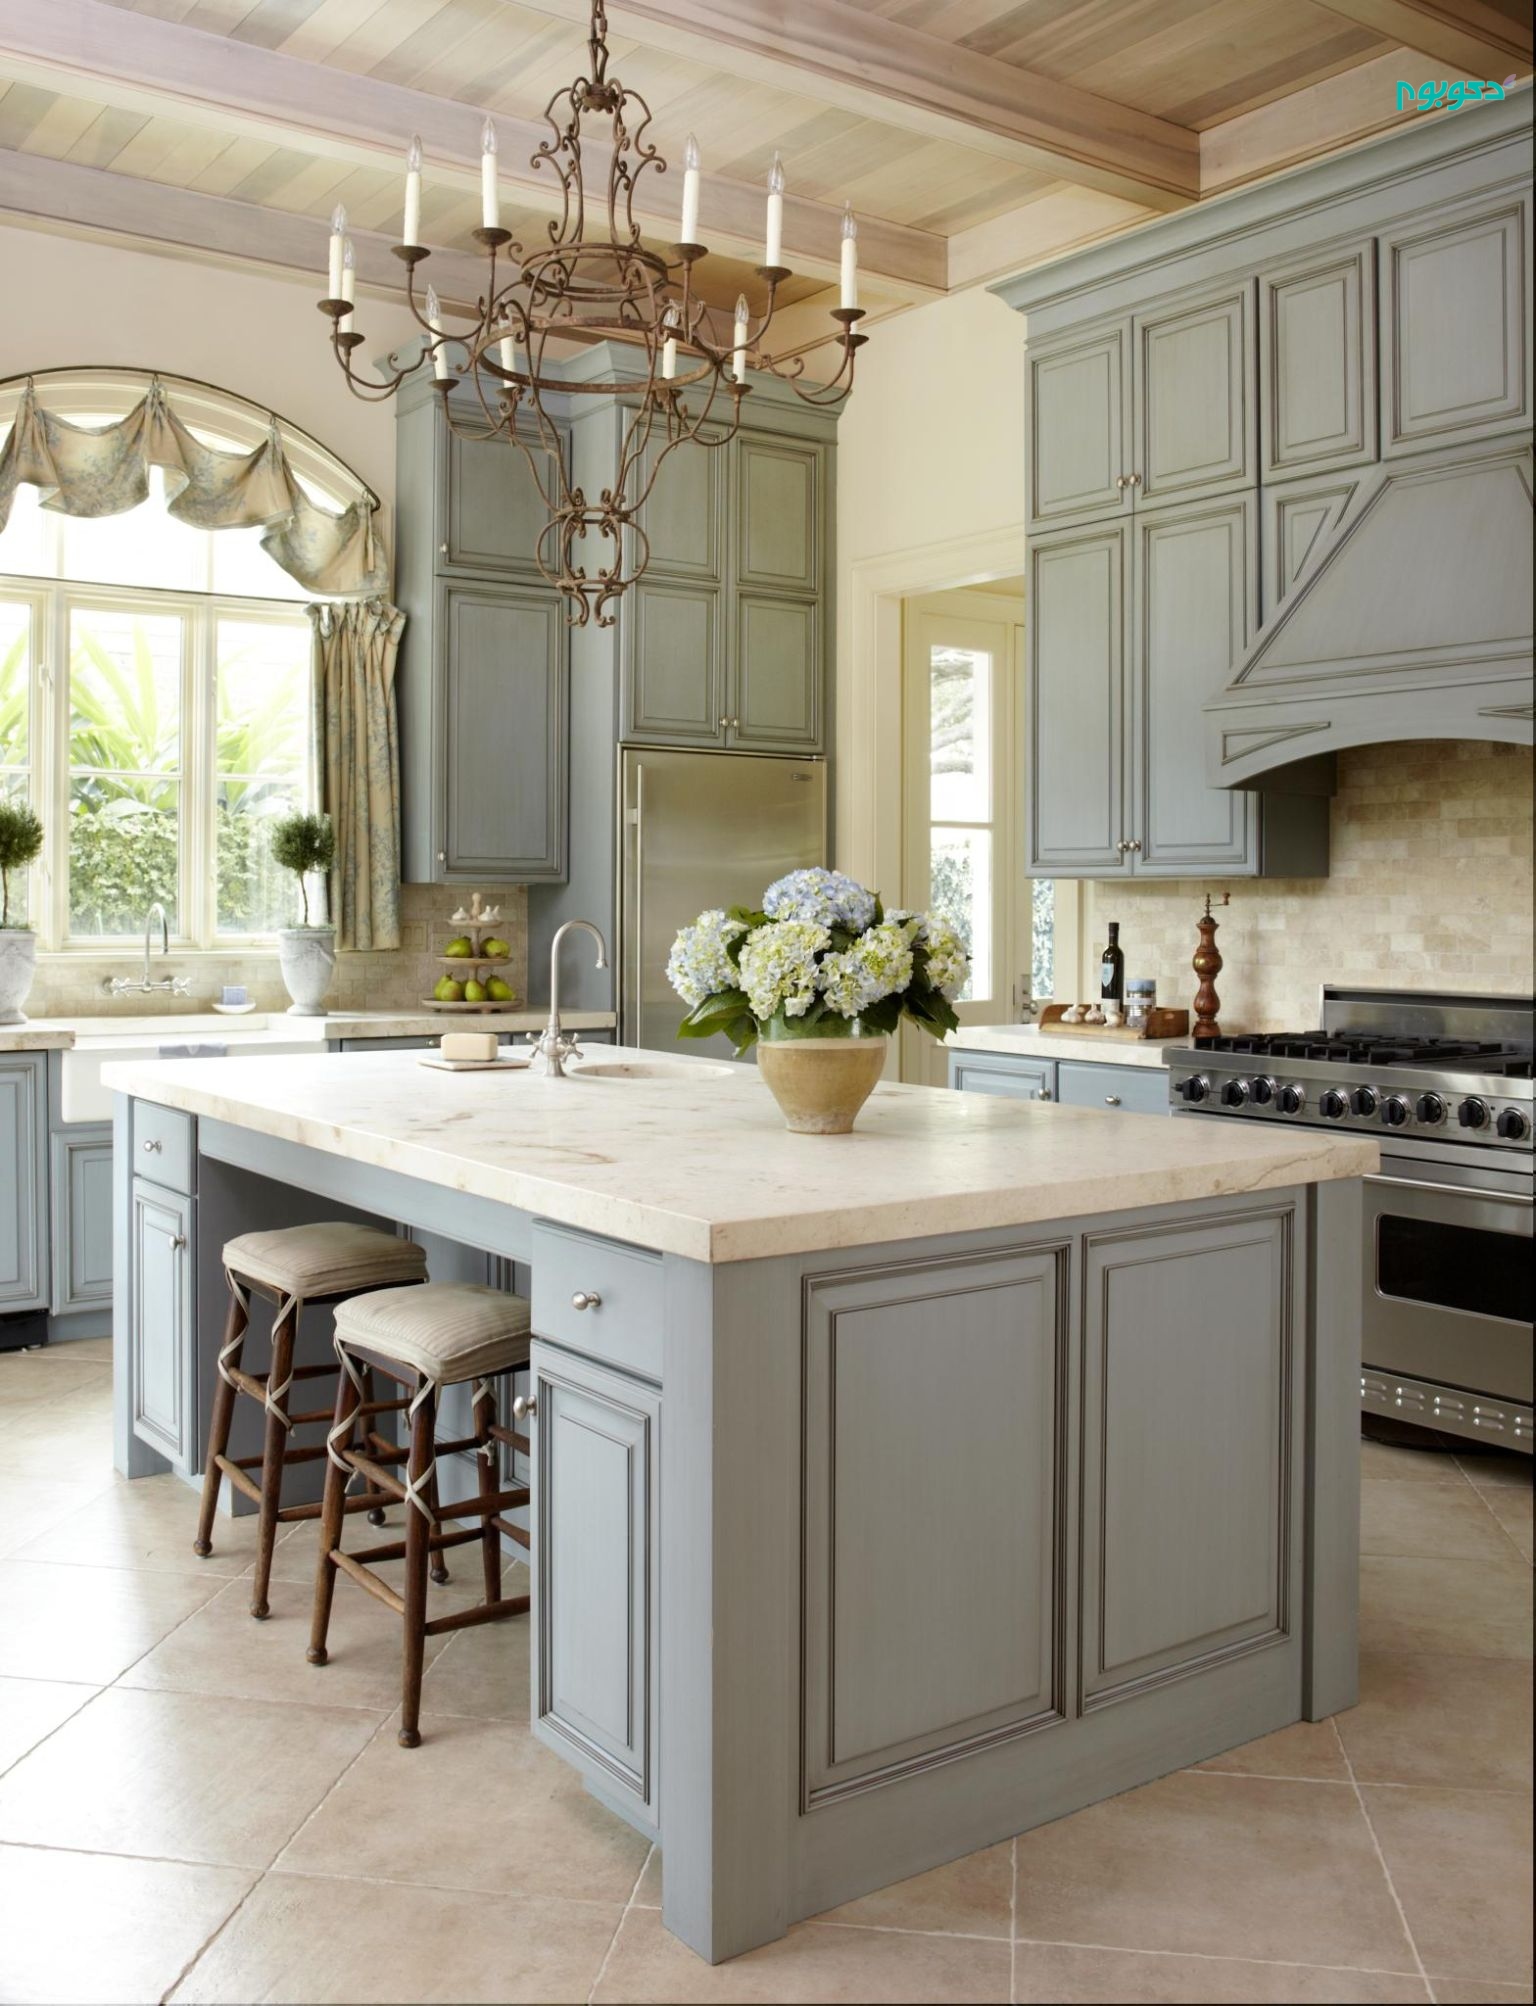 21-quality-and-timeless-style-kitchen-idea-homebnc-768x1003@2x.jpg